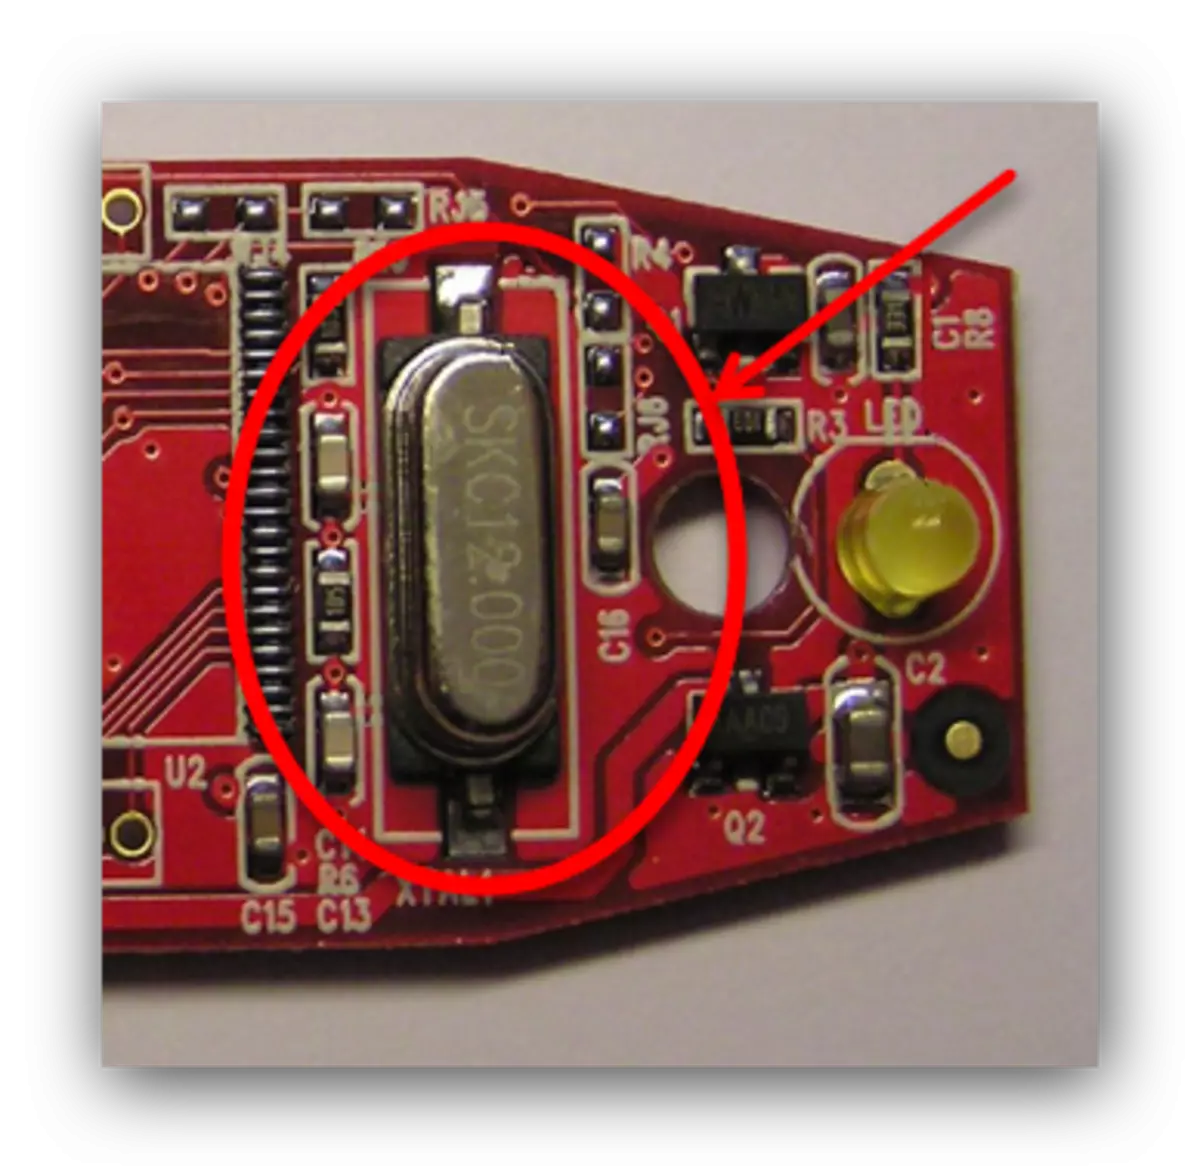 Resonator pada PCB flash drive